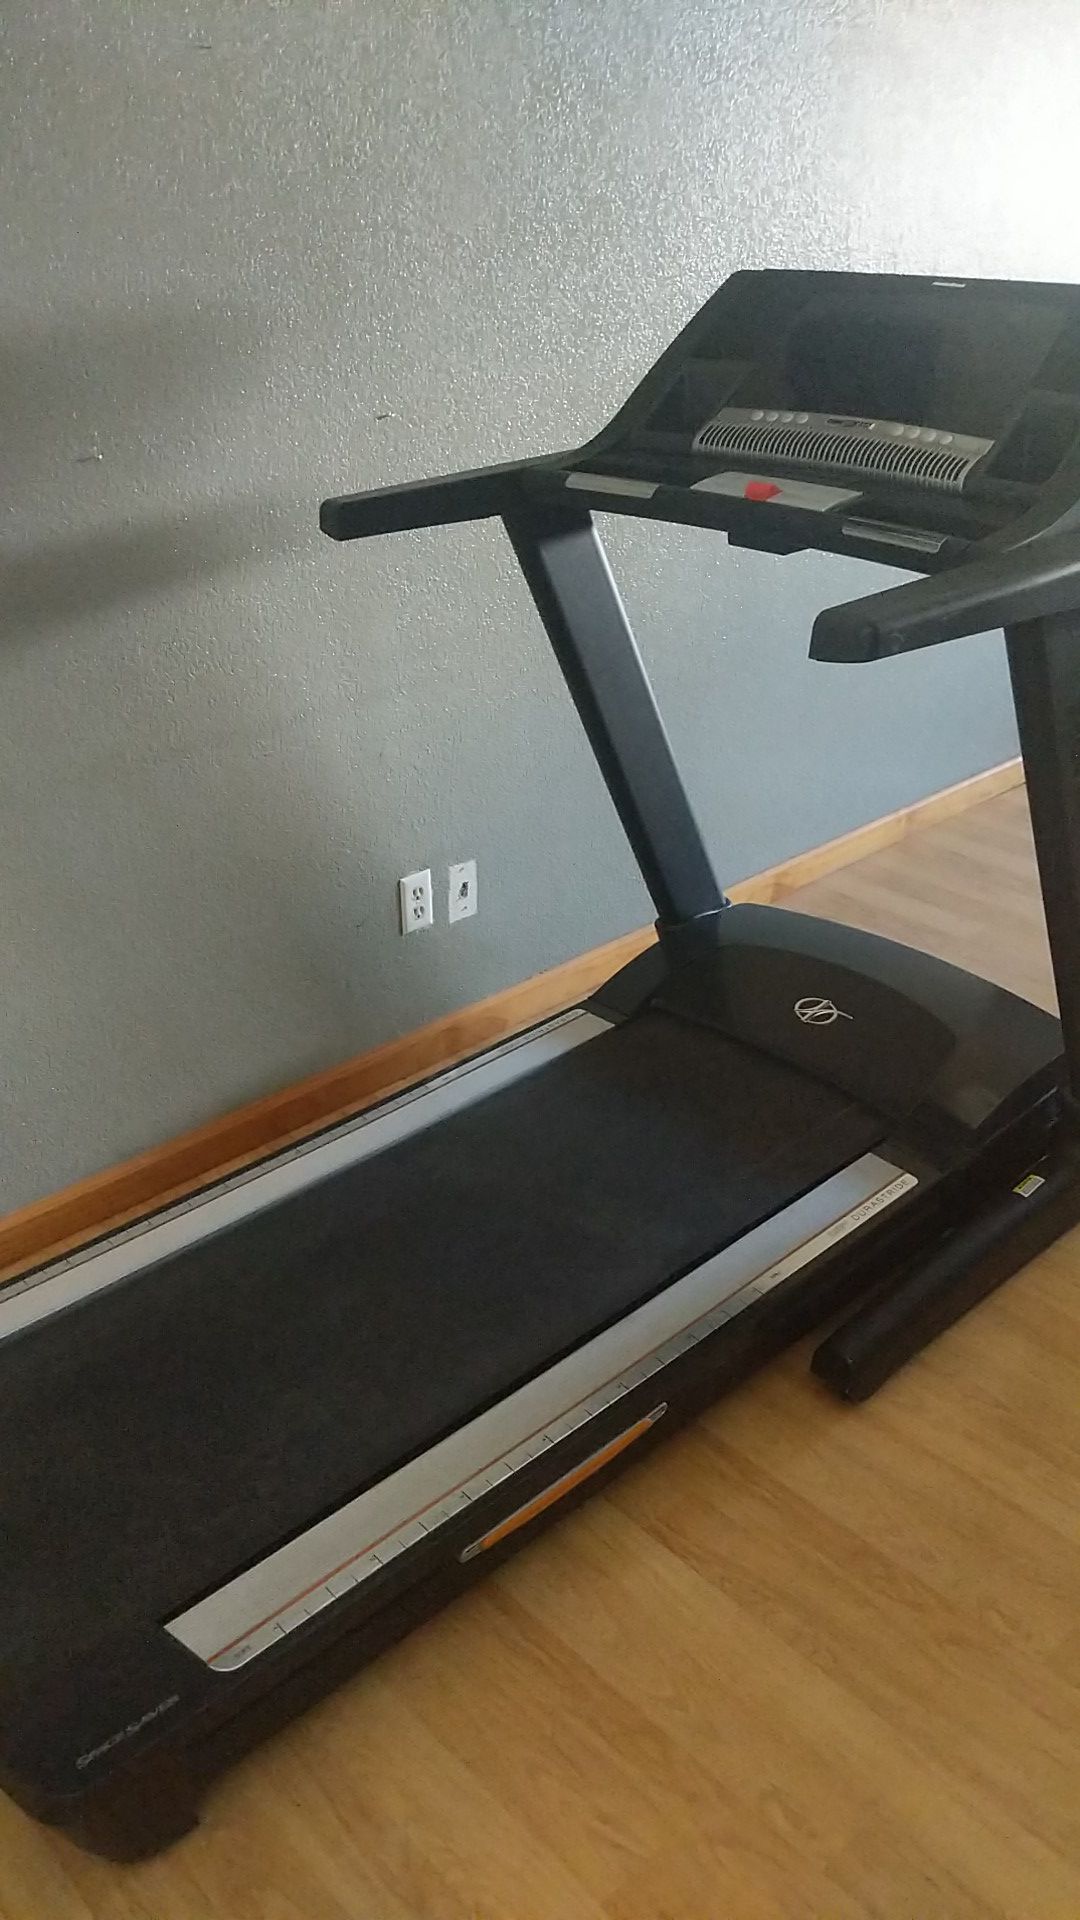 Nordictrack zi treadmill